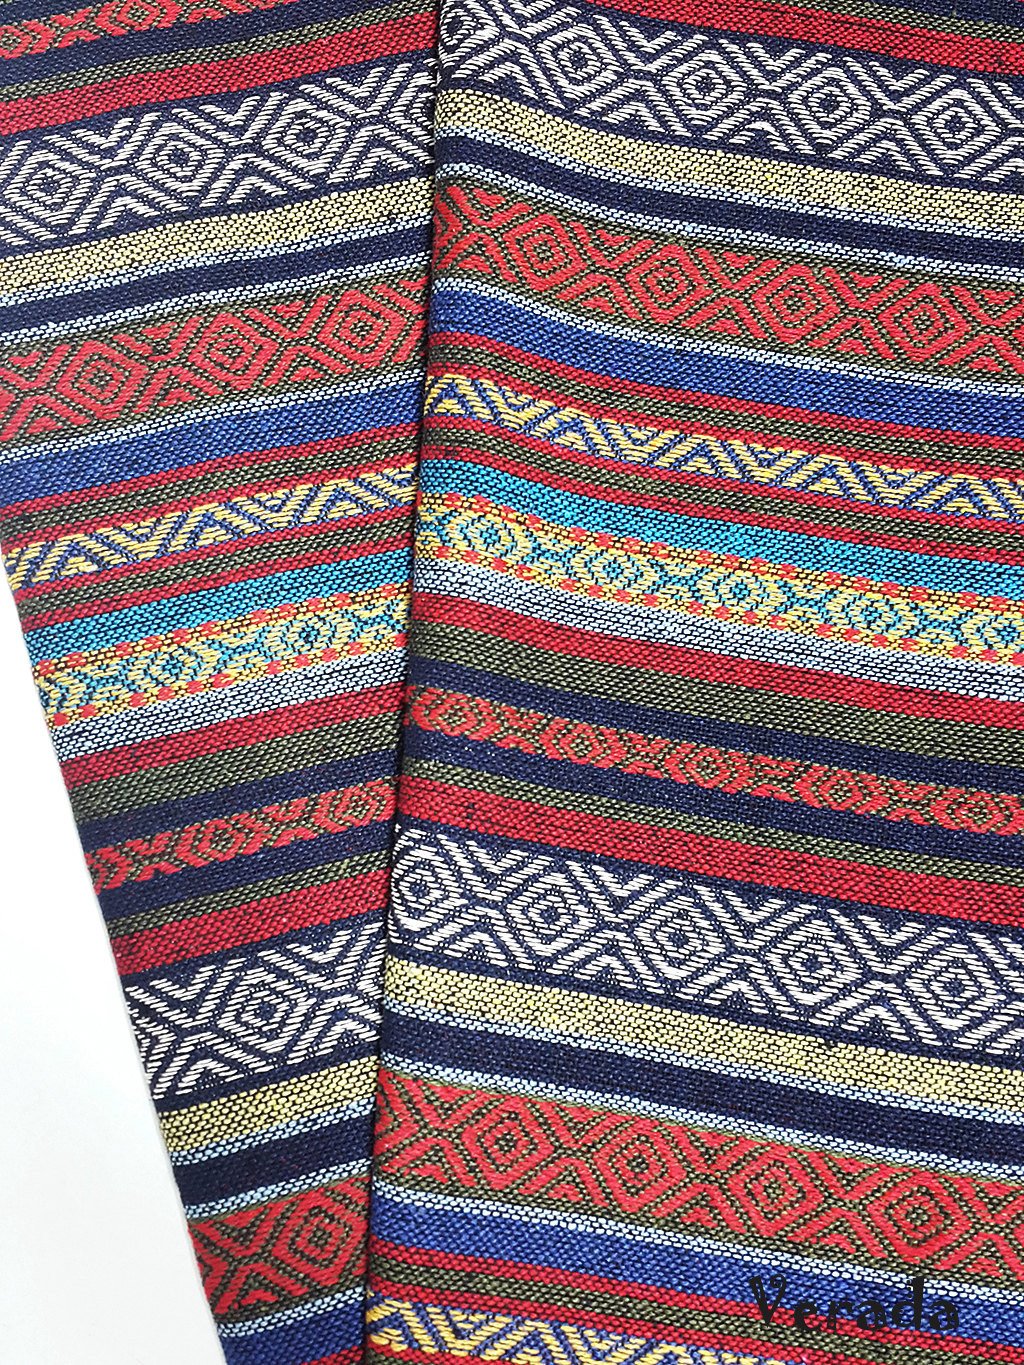 Thai Woven Cotton Tribal Fabric Textile 1/2 yard (WF82)